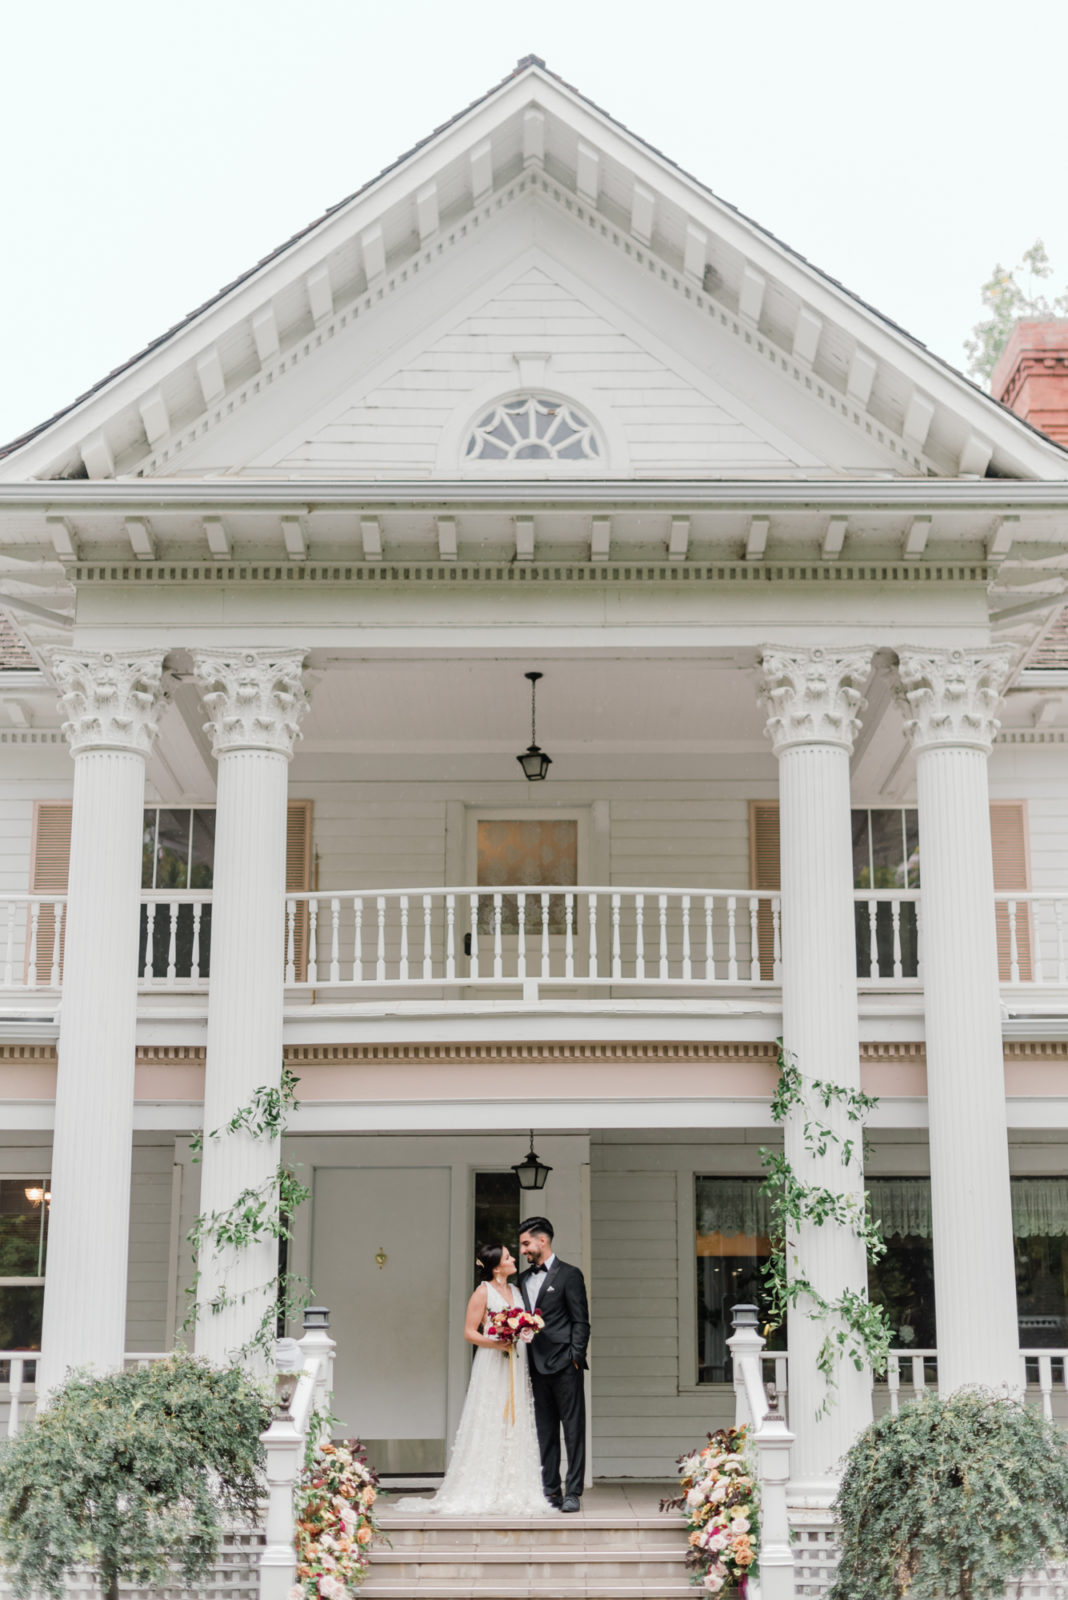 Elegant Estate Wedding Inspiration - True to Hue Shootout featured on the Bronte Bride Blog